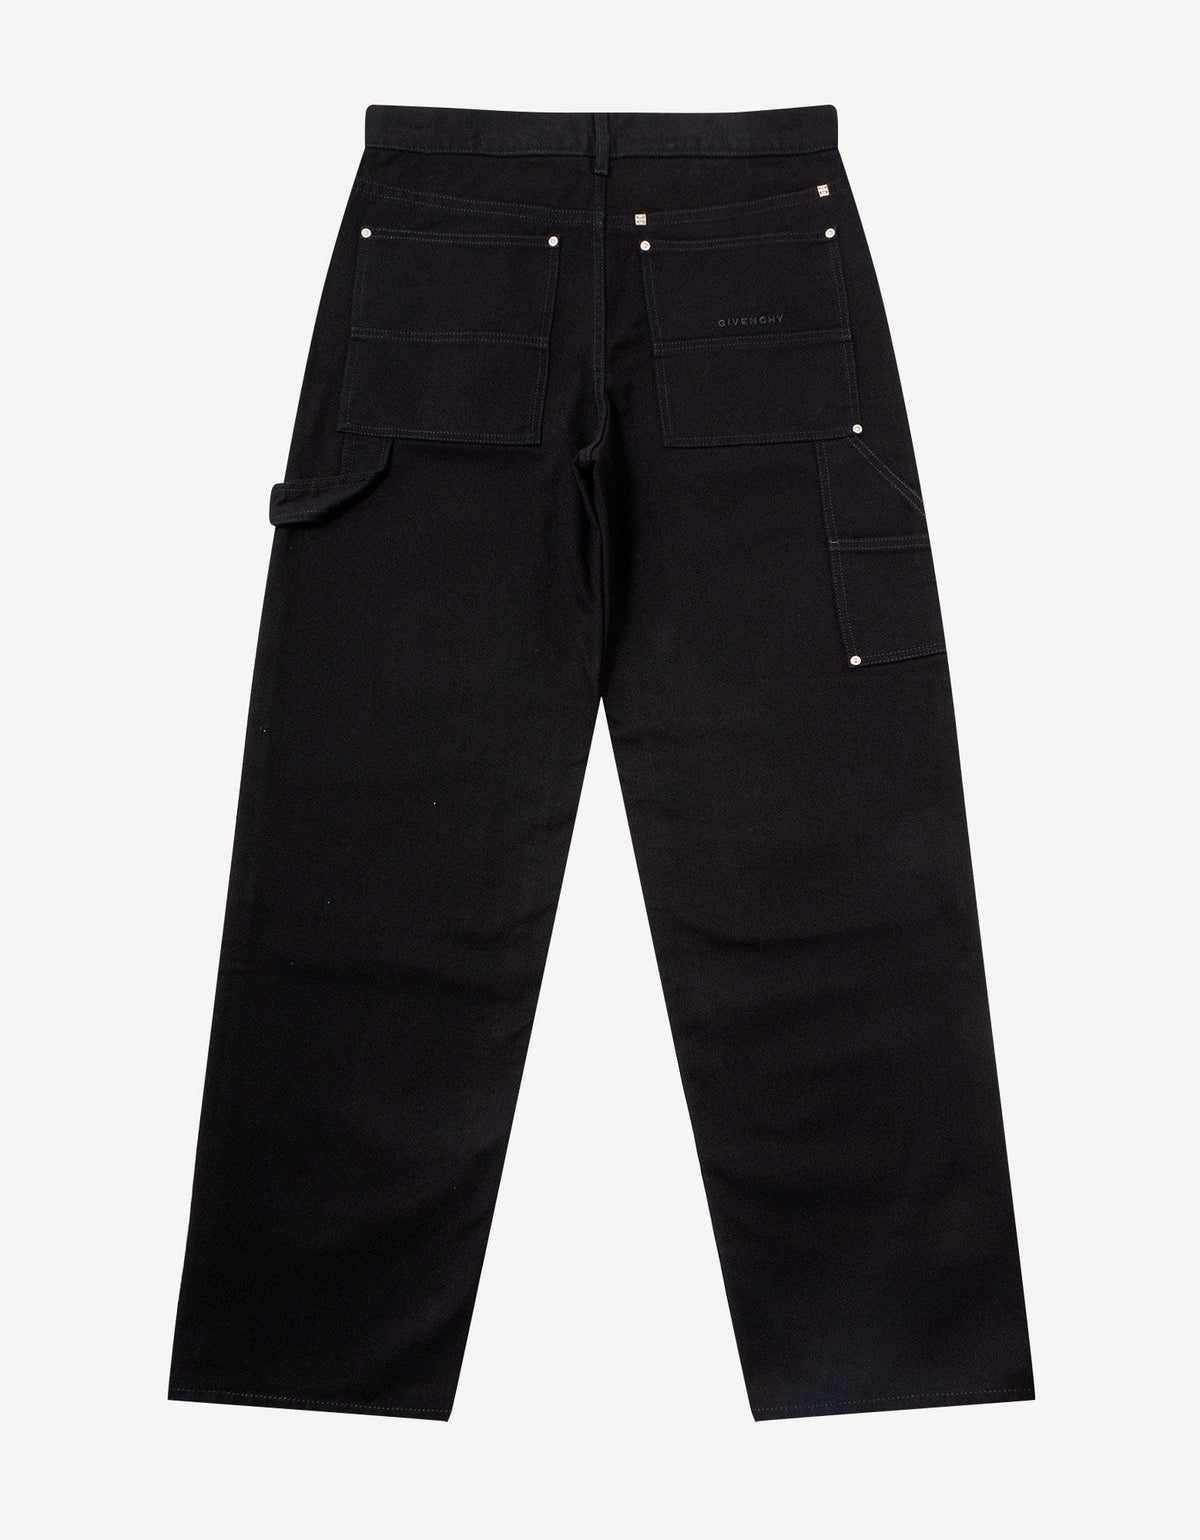 Givenchy Black Carpenter Jeans